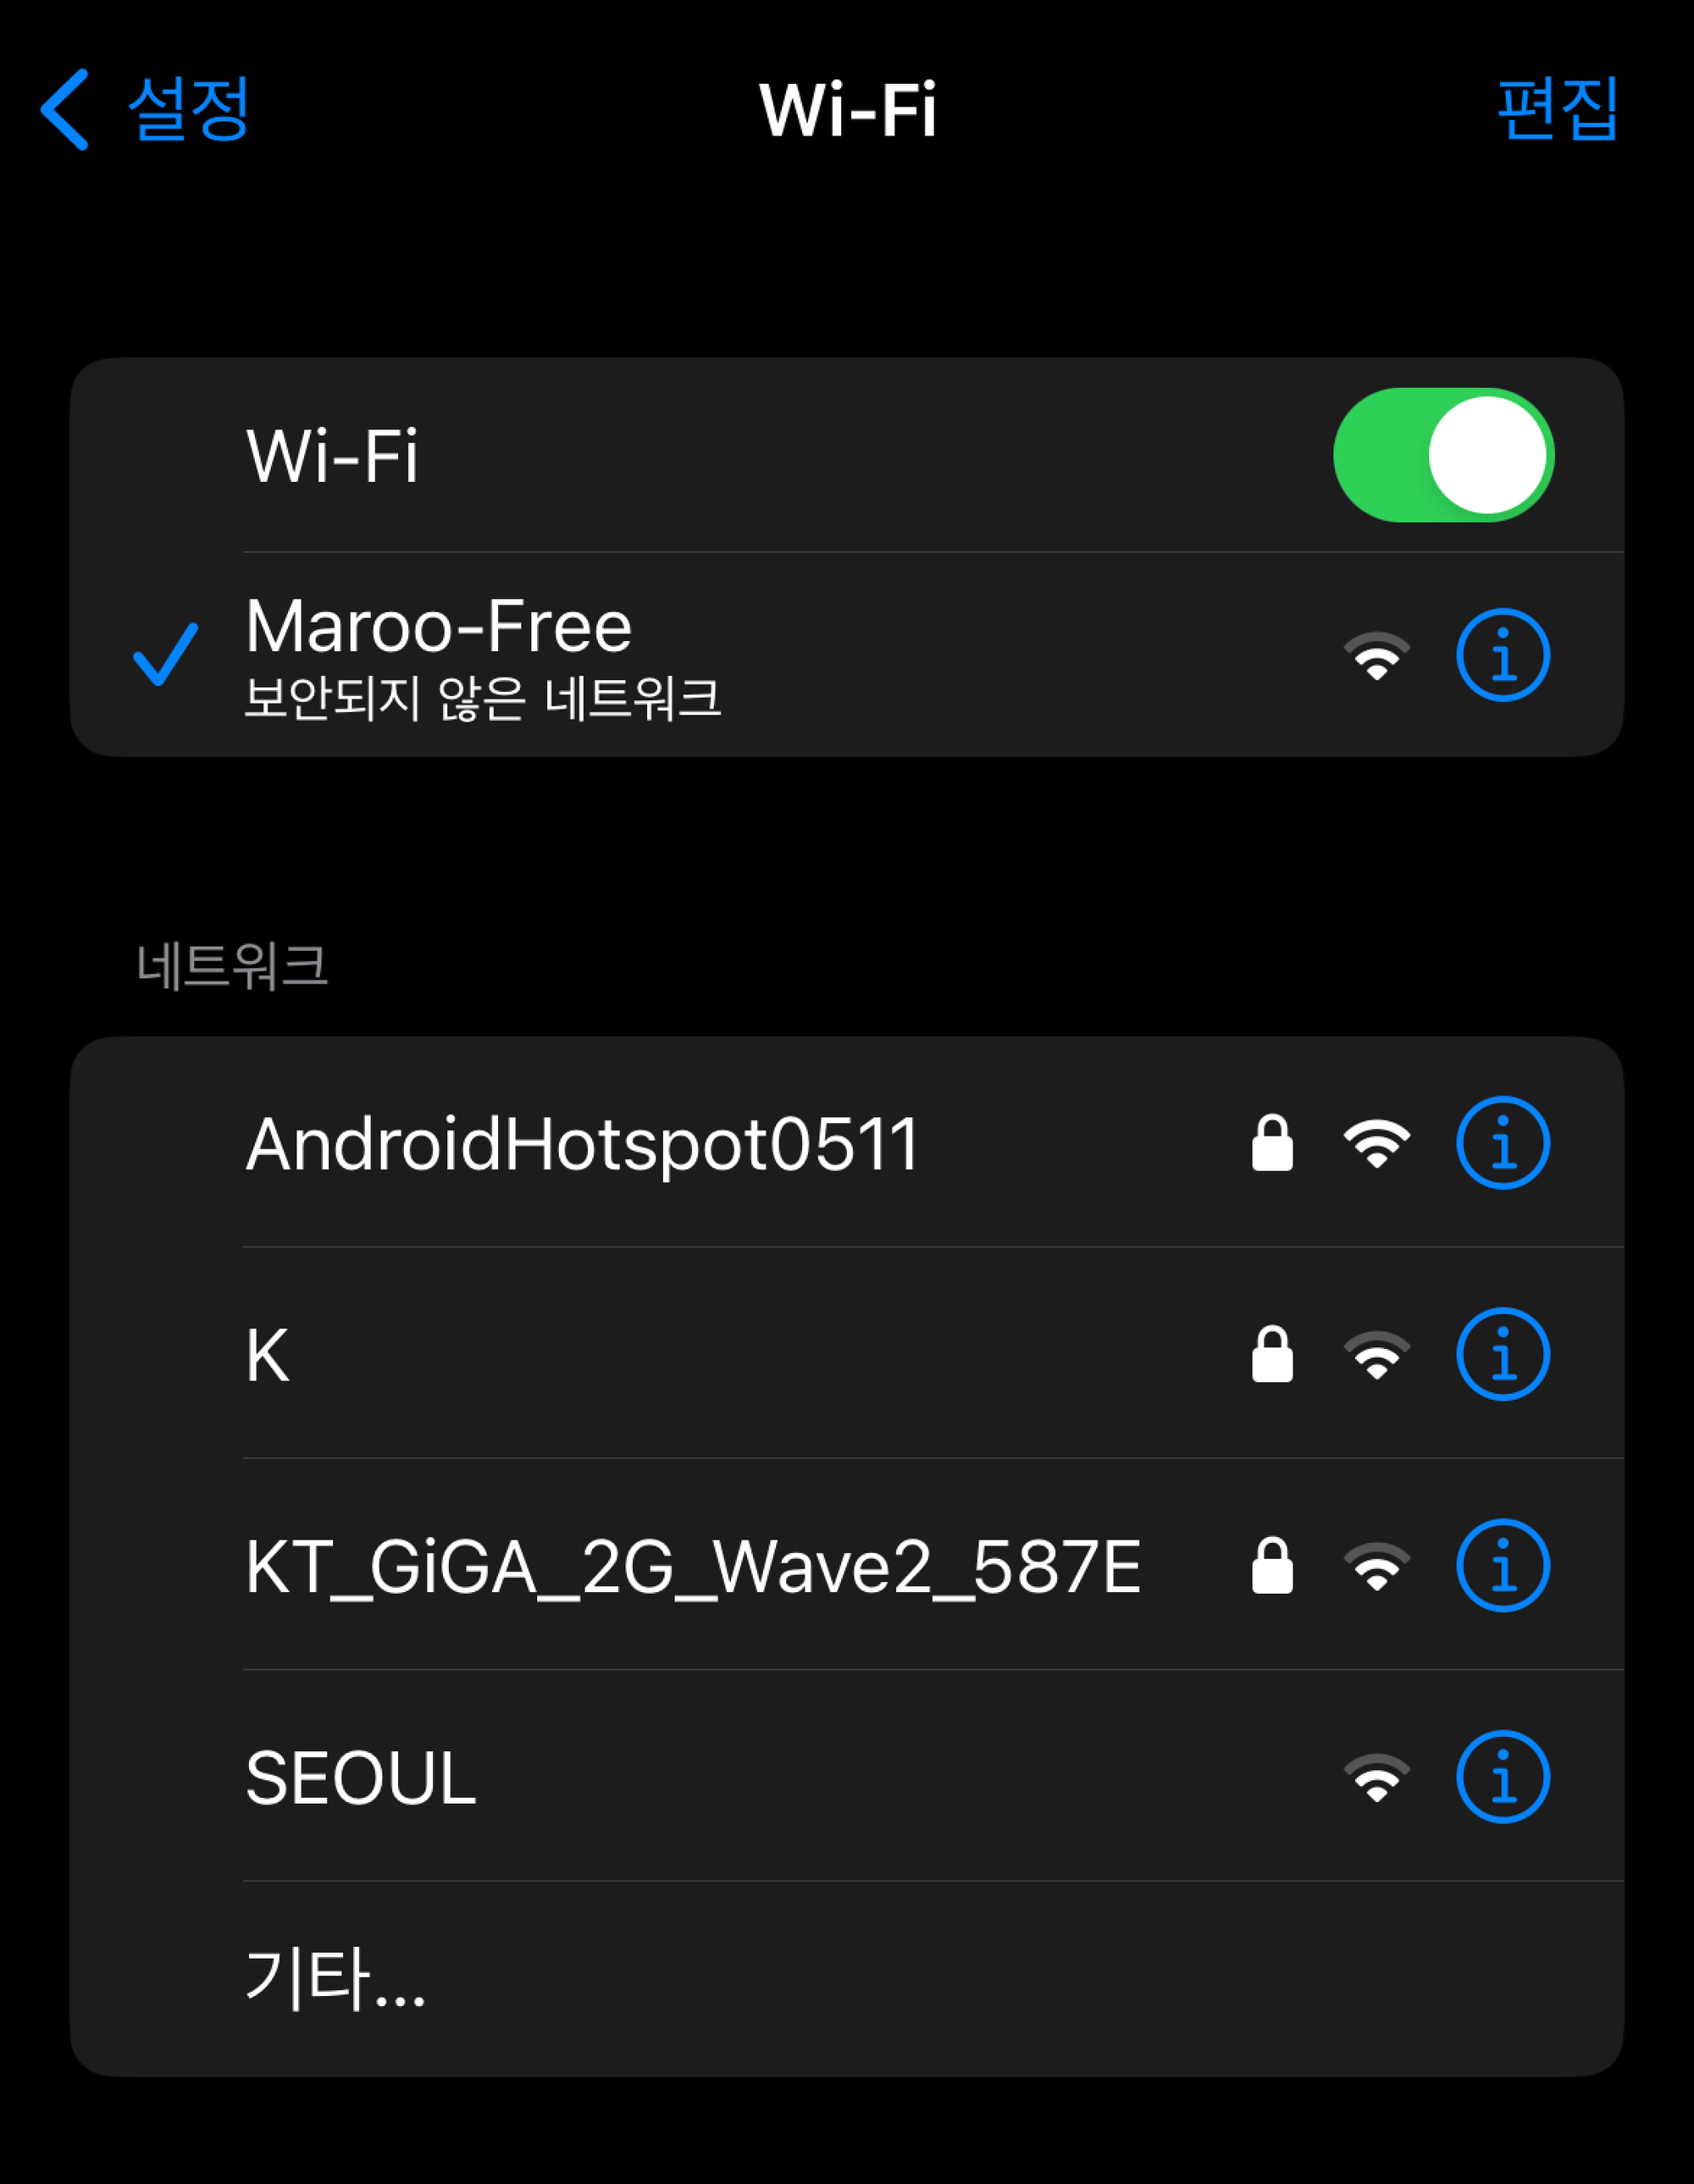 Maroo-Free 와이파이